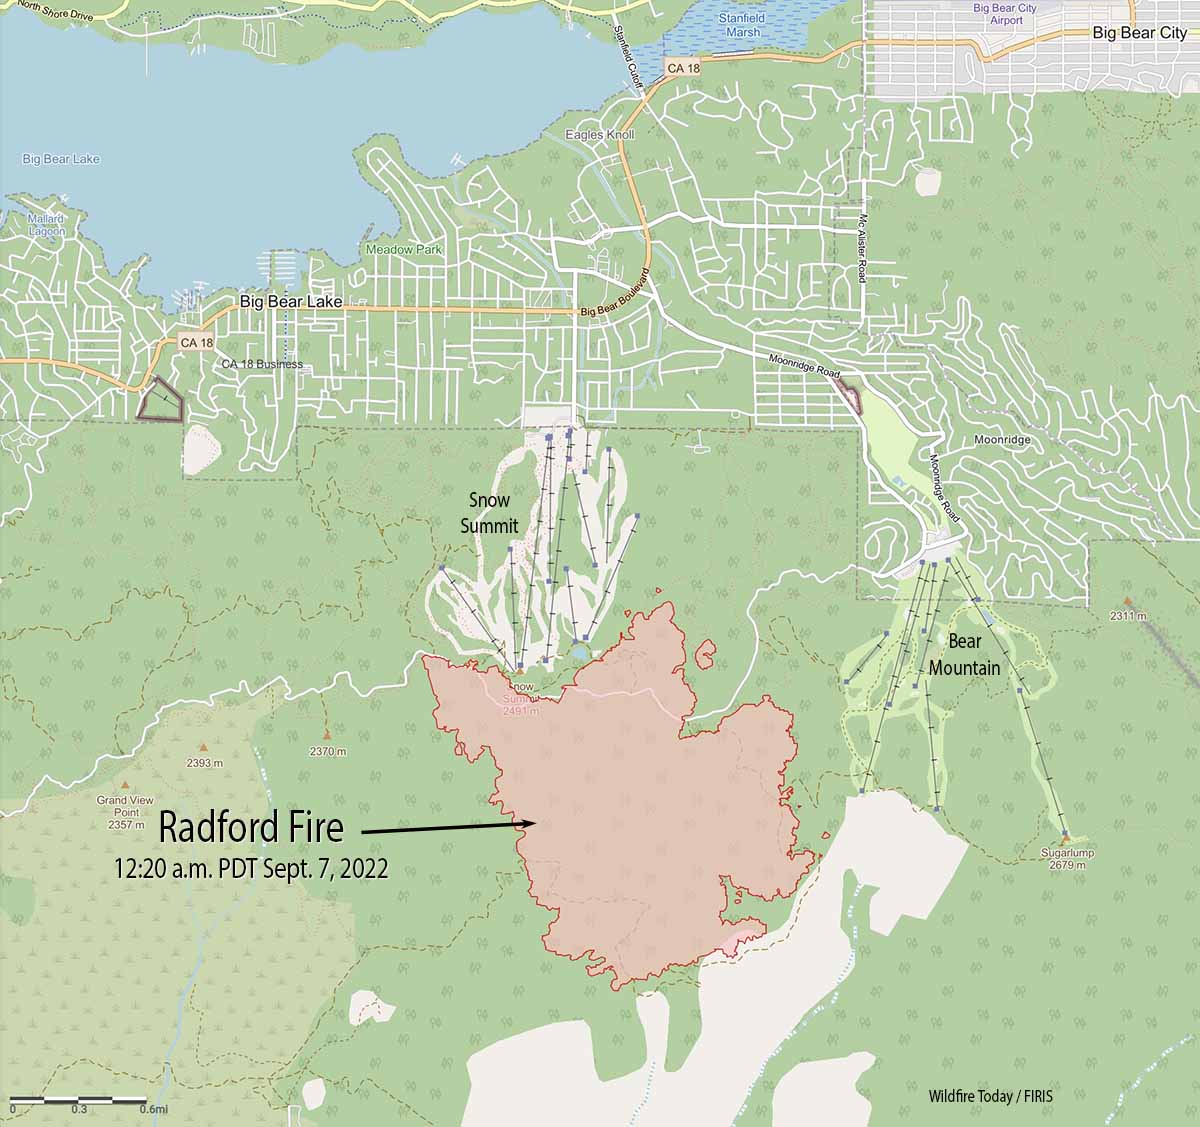 Radford Fire Map 12:20 a.m. Sept. 7, 2022